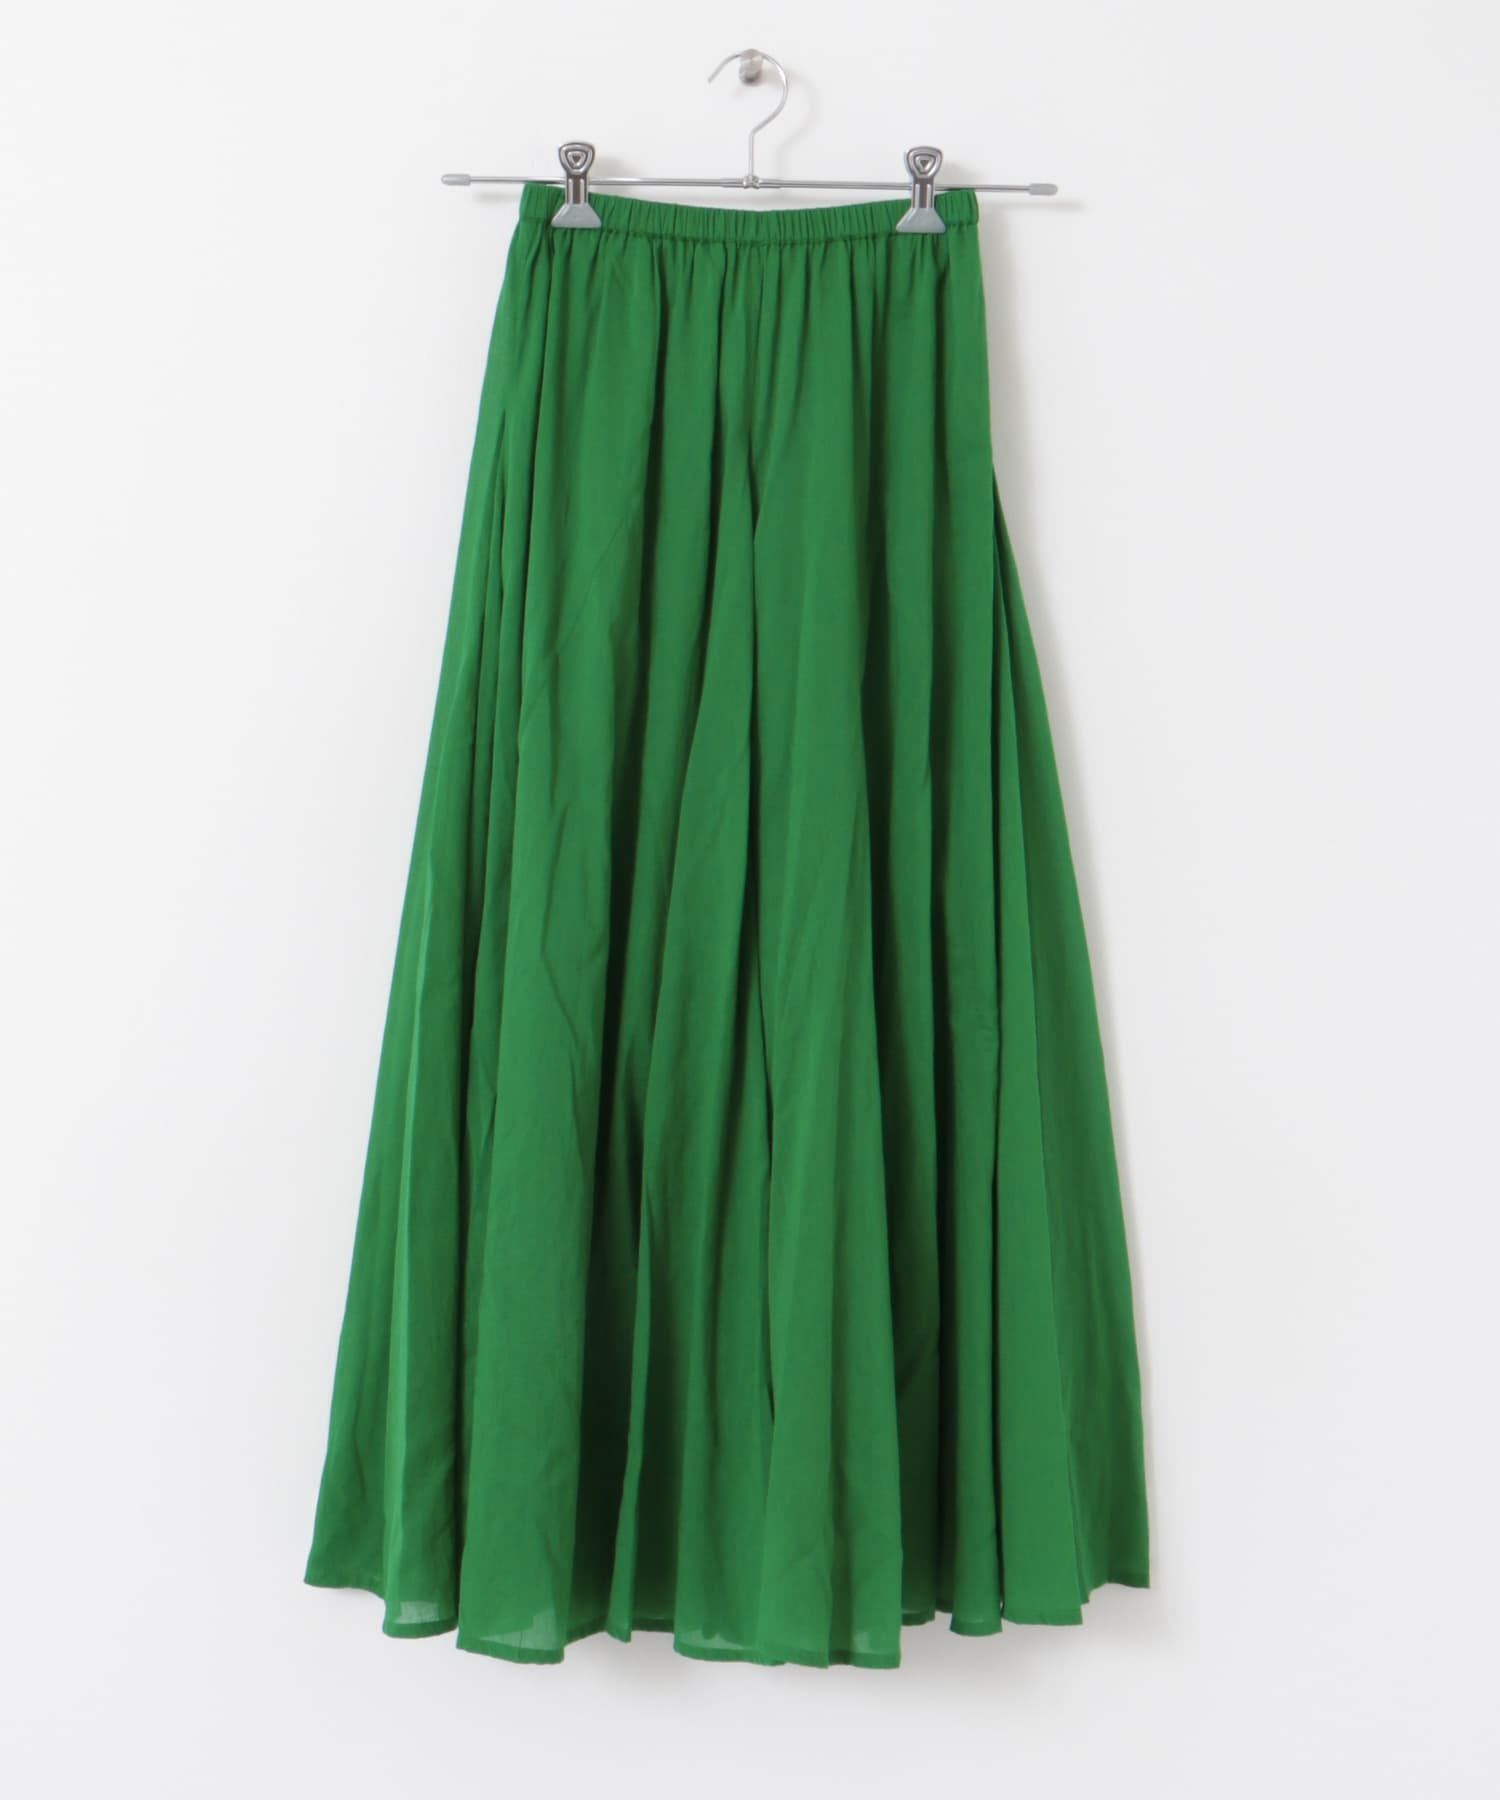 空氣感棉質巴里紗傘狀裙(綠色-FREE-GREEN)